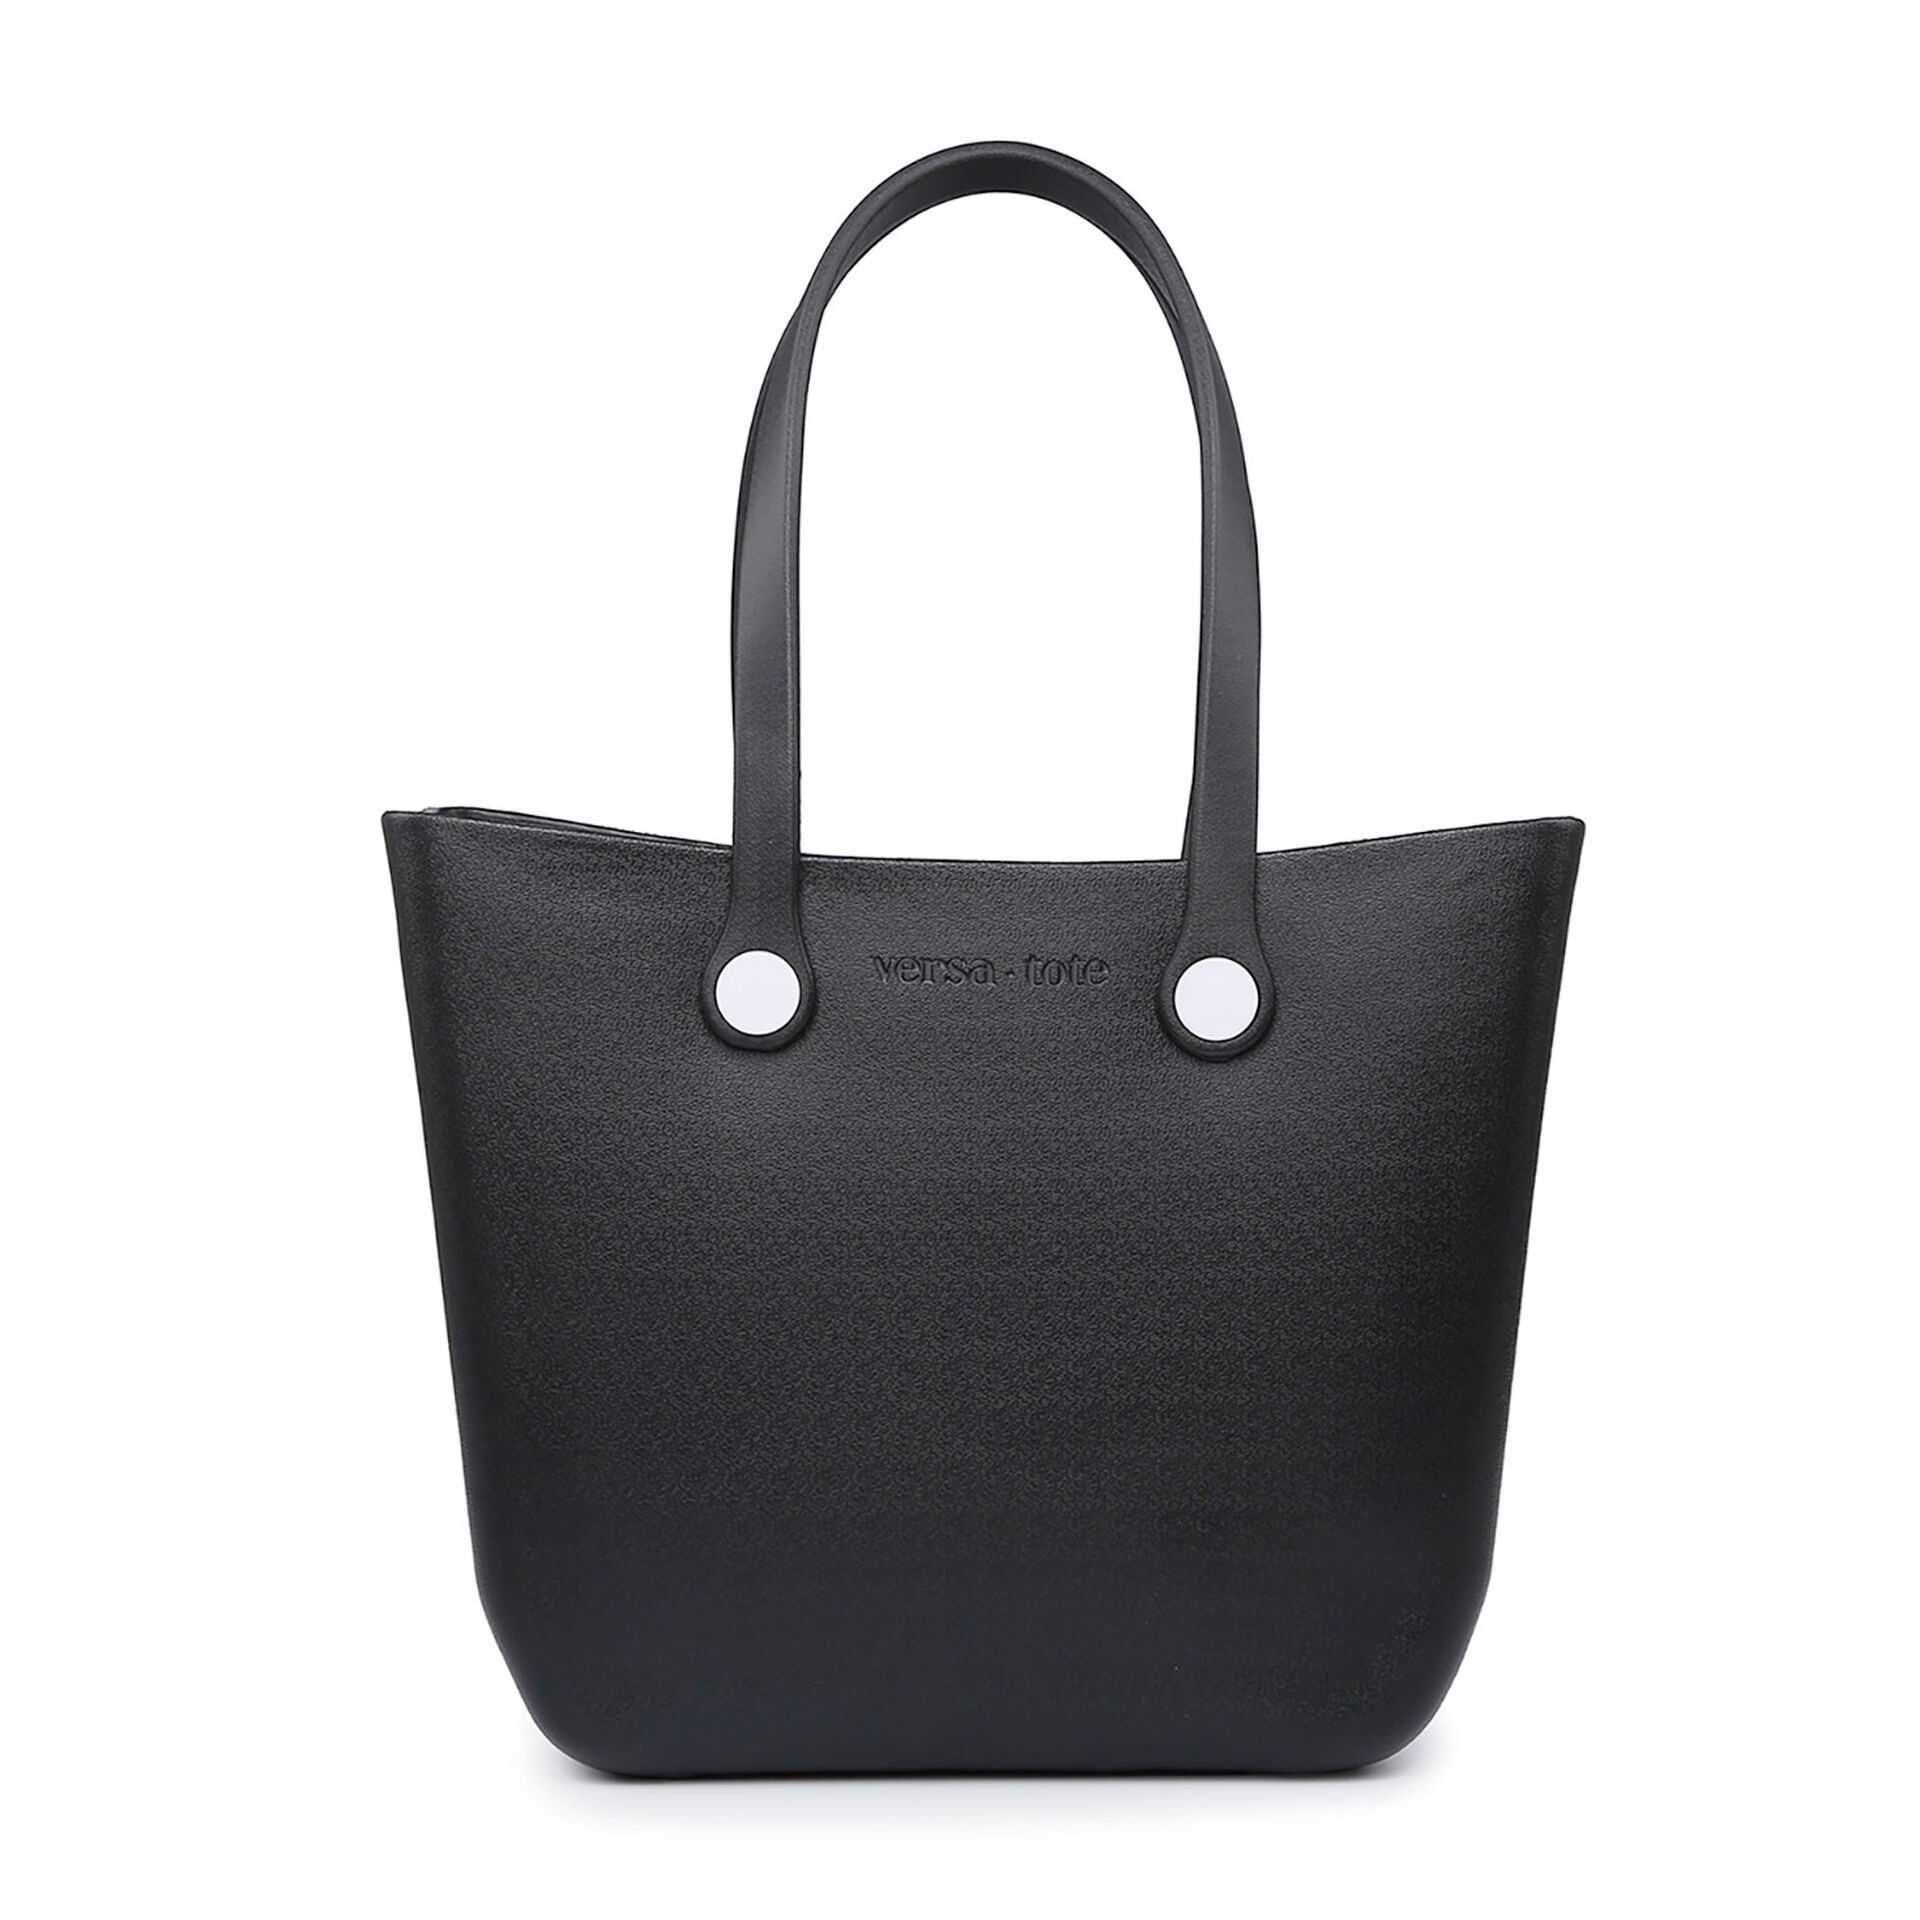 Jen & Co. Small Vira Versa Tote Bag in Black - Handbags & Purses - Hallmark